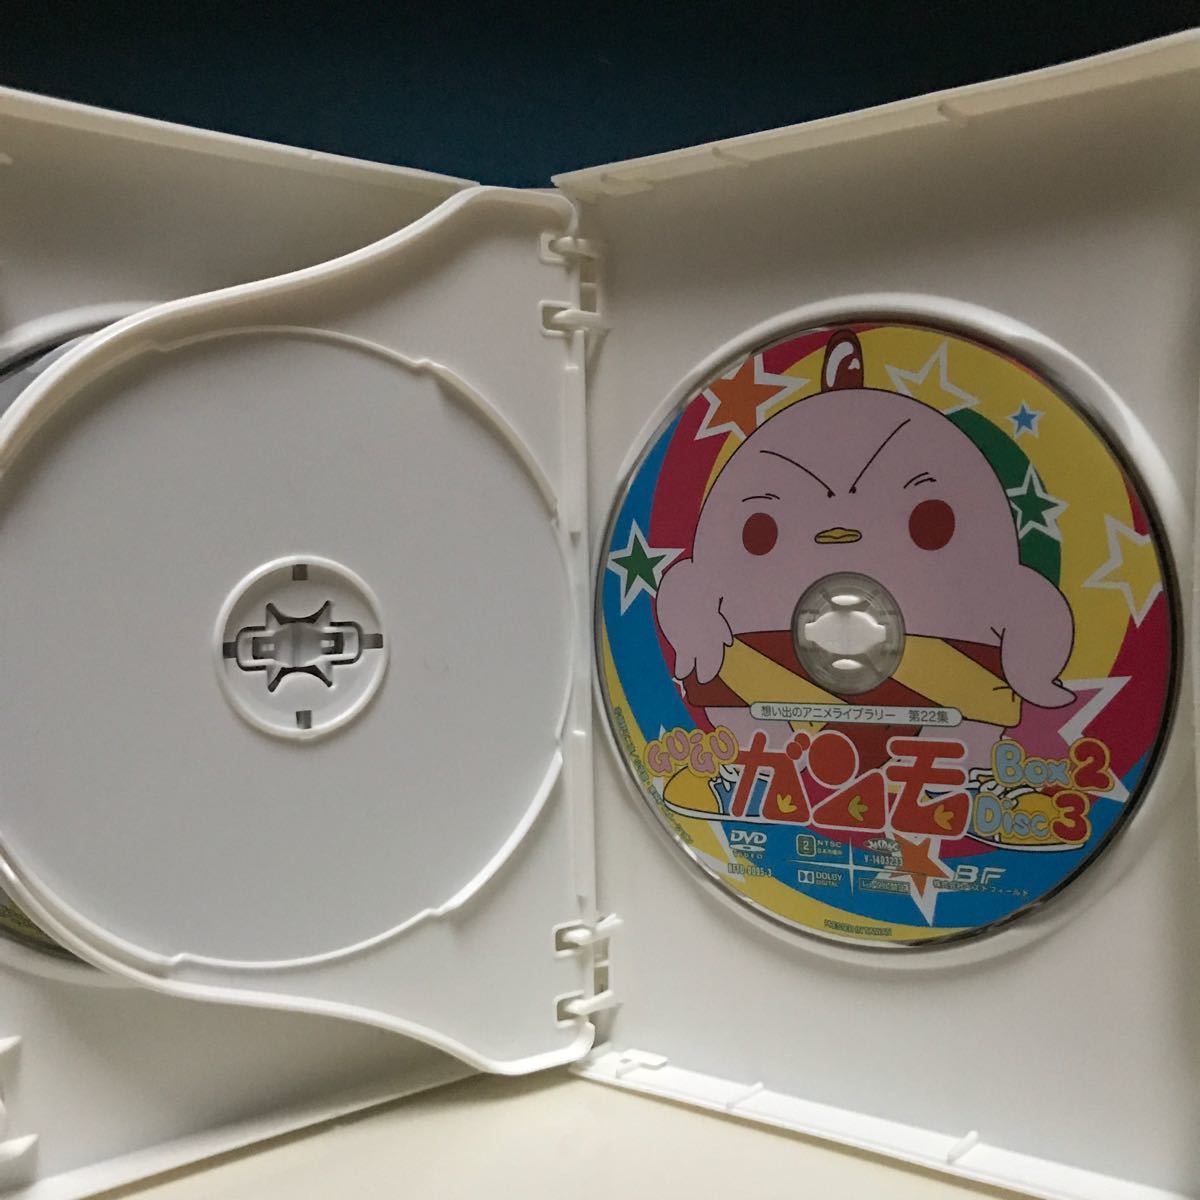 Gu-Gu ガンモ デジタルリマスター版 DVD-BOX2